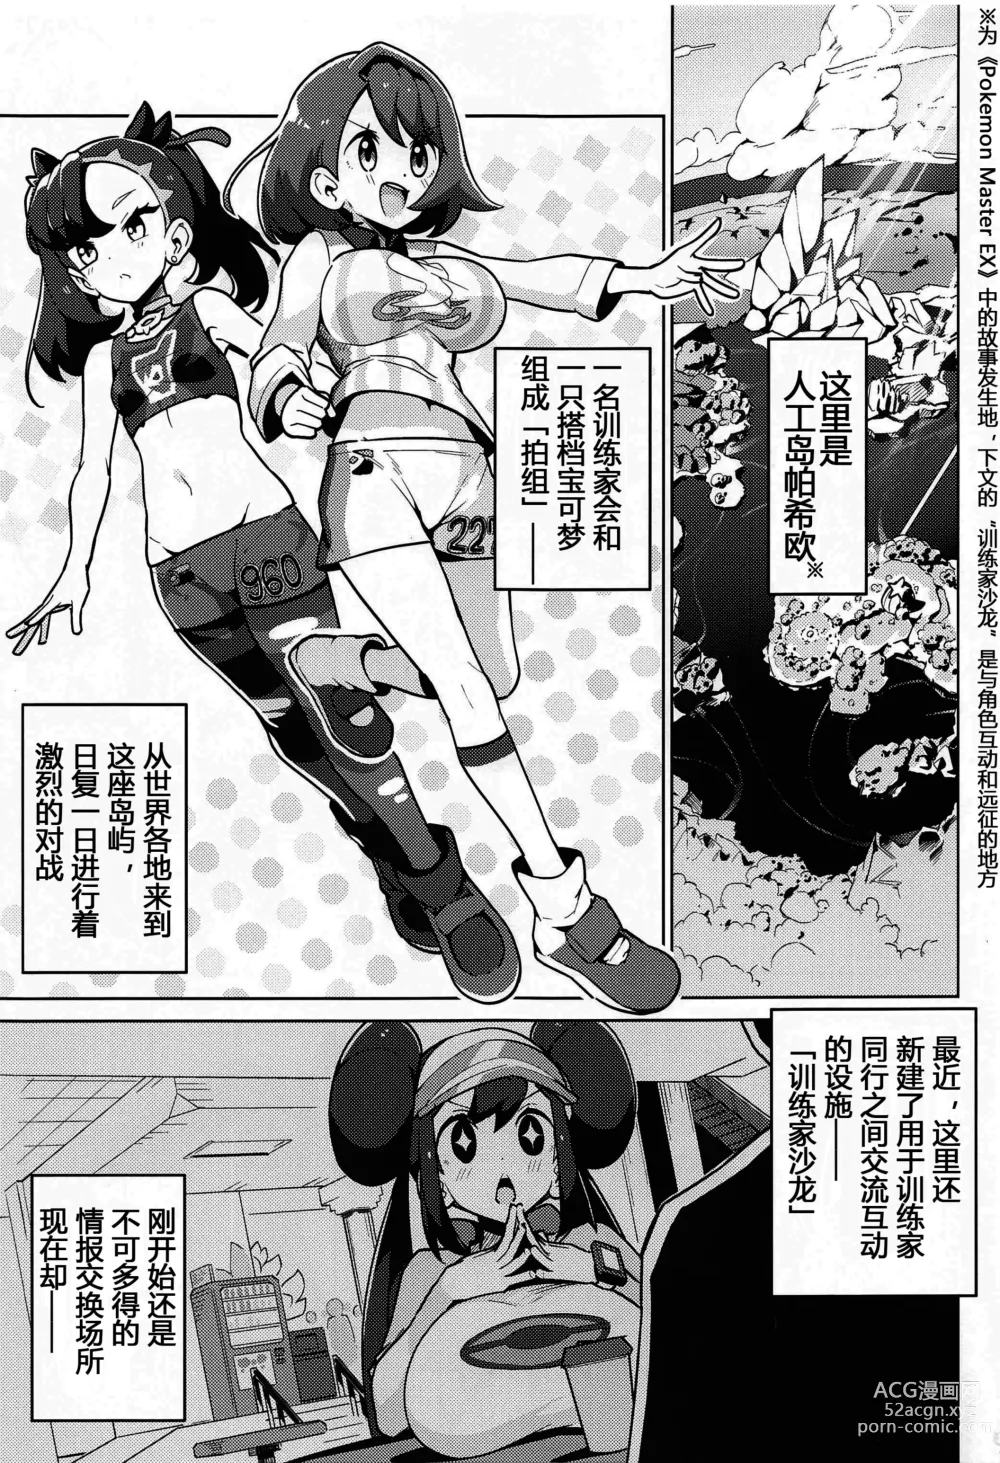 Page 3 of doujinshi 宝可碧池 2